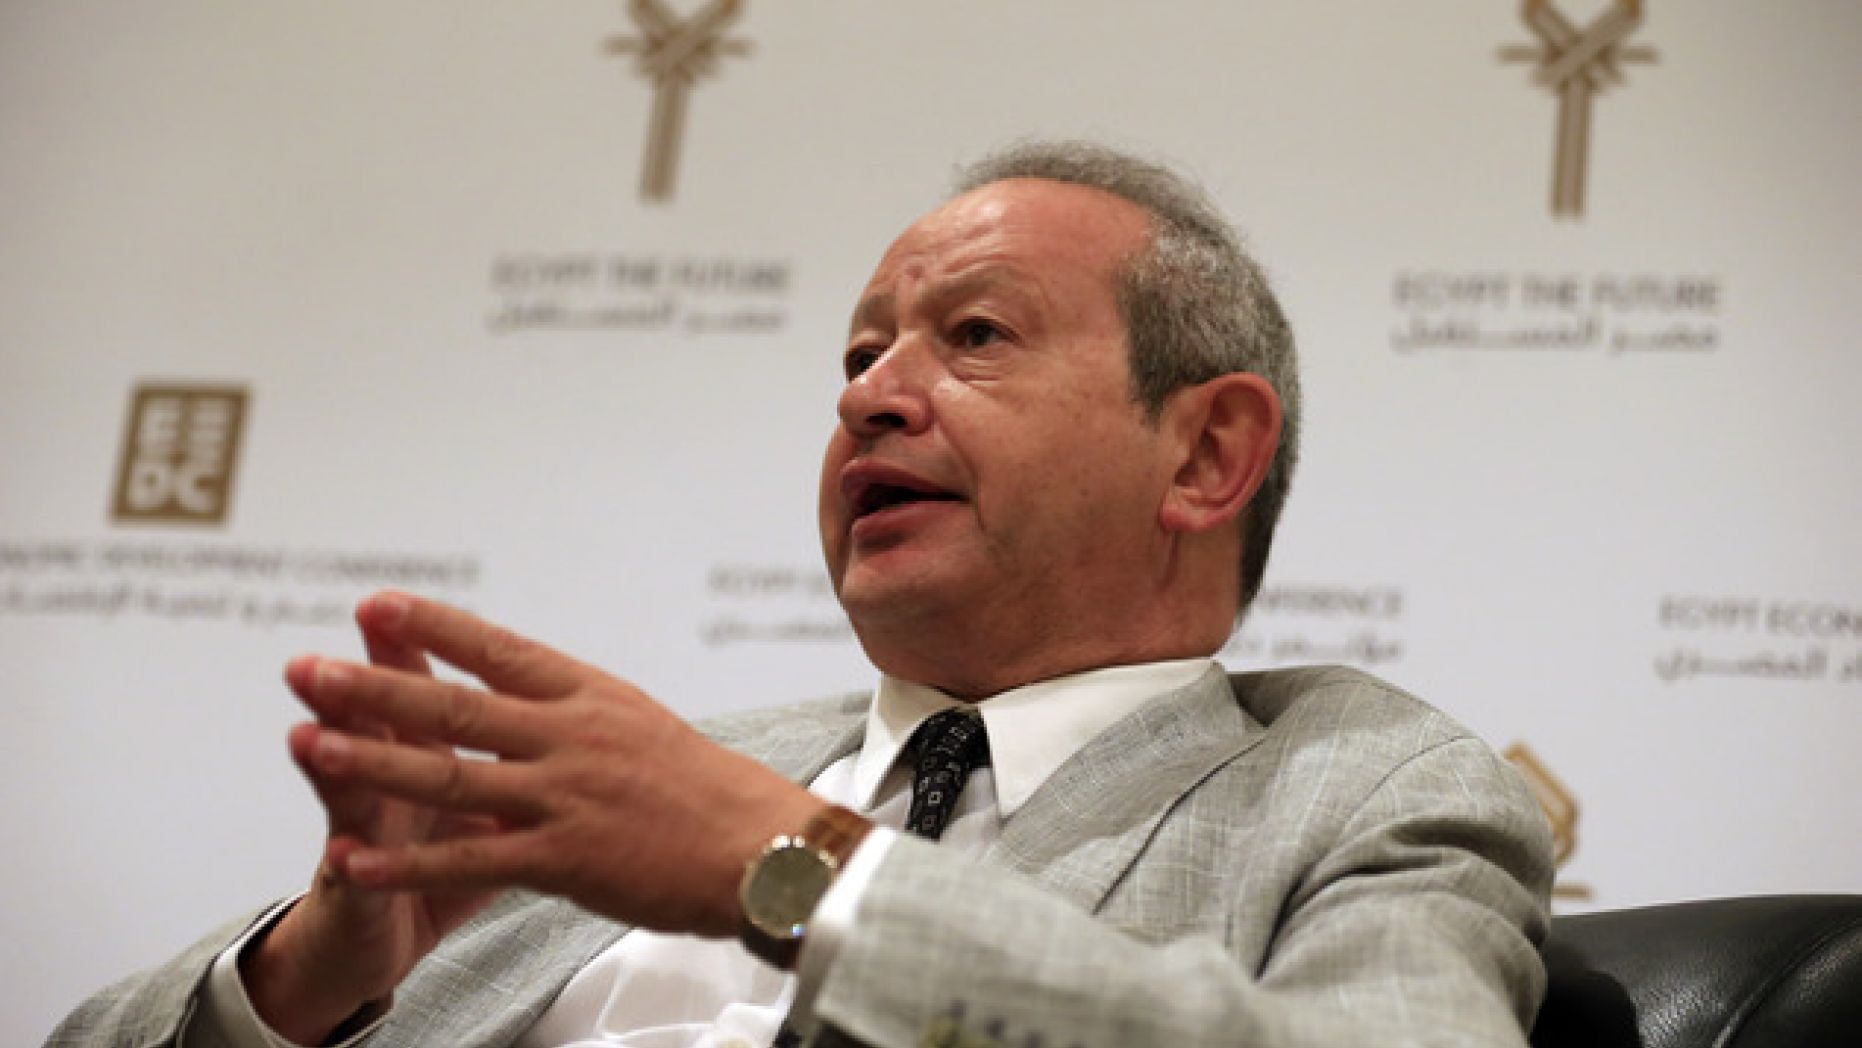 Naguib Sawiris wearing a gray suit